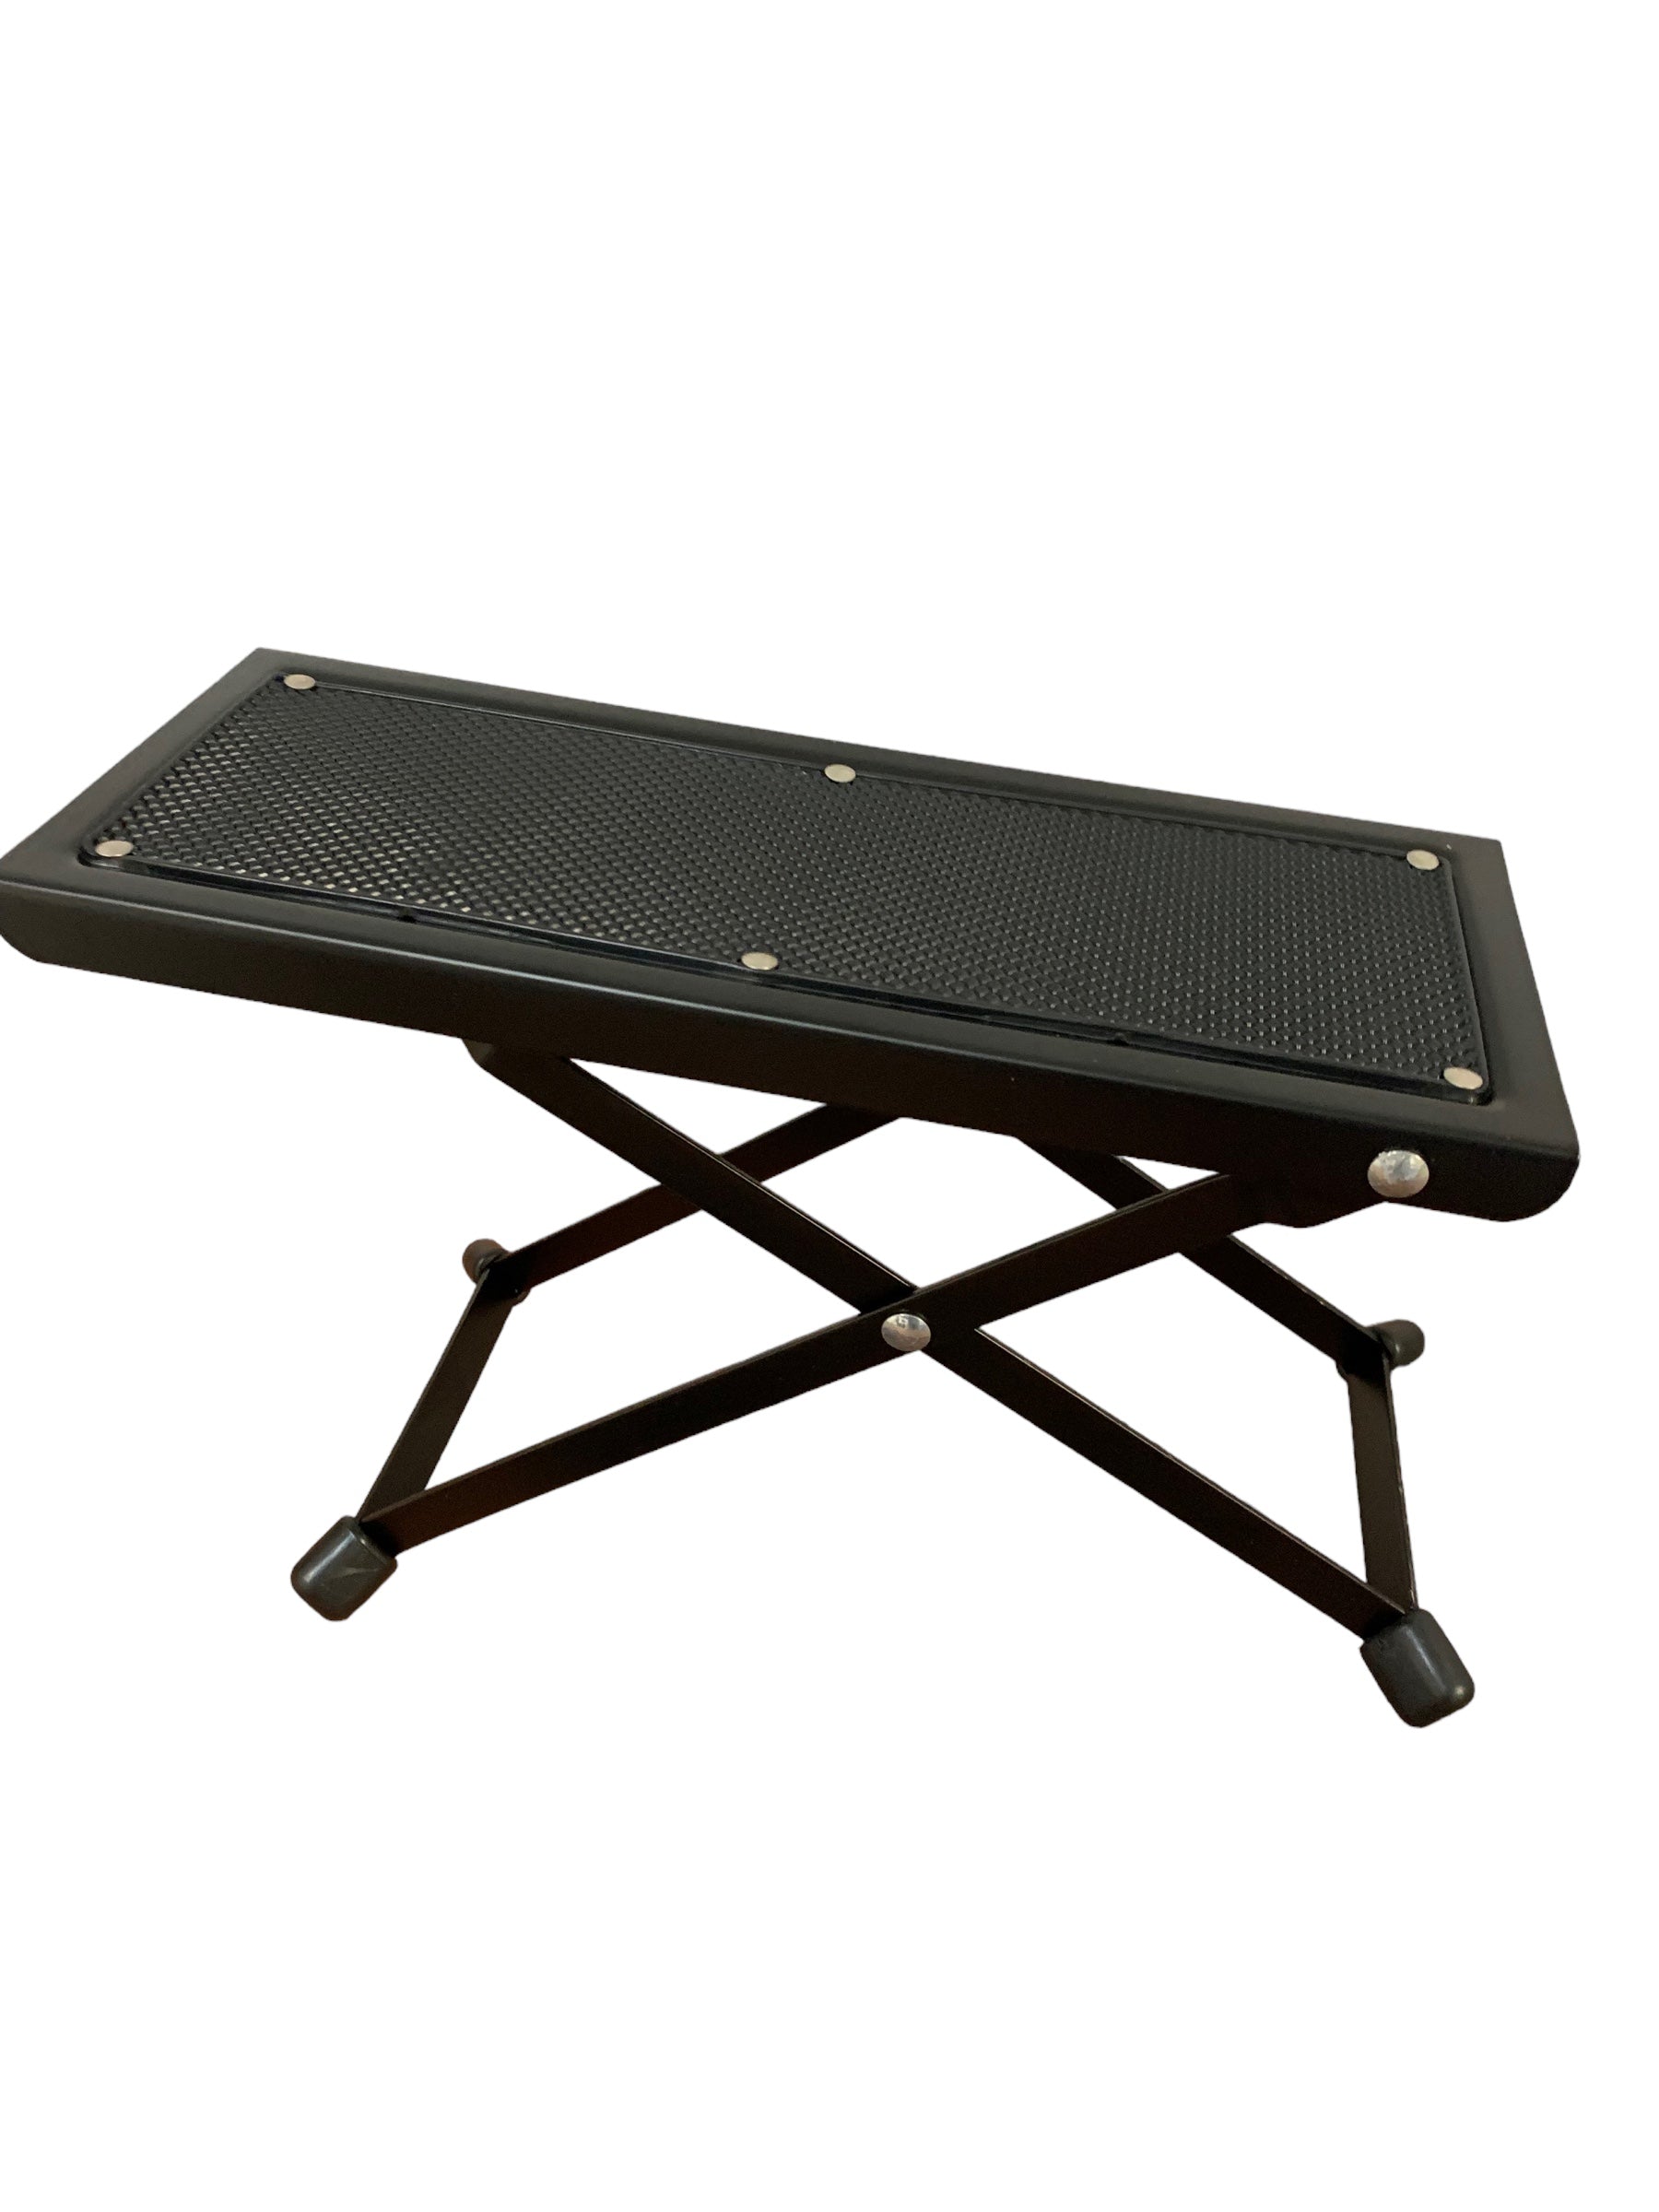 Metal Folding Guitar Footstool Rest Anti-Slip Stand Height